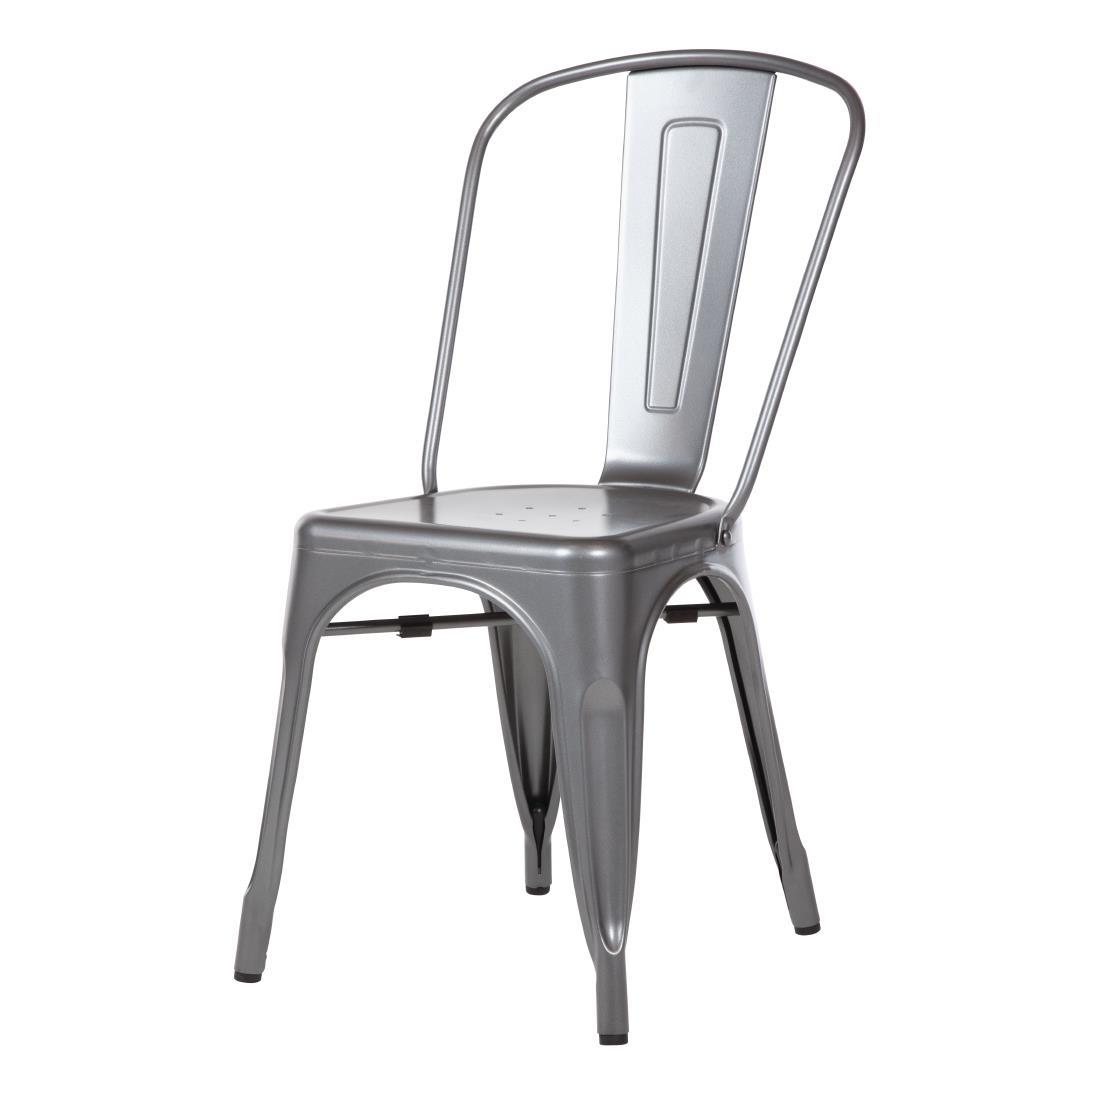 Bolero Bistro Steel Side Chairs Gun Metal Grey (Pack of 4) - GL329  - 2